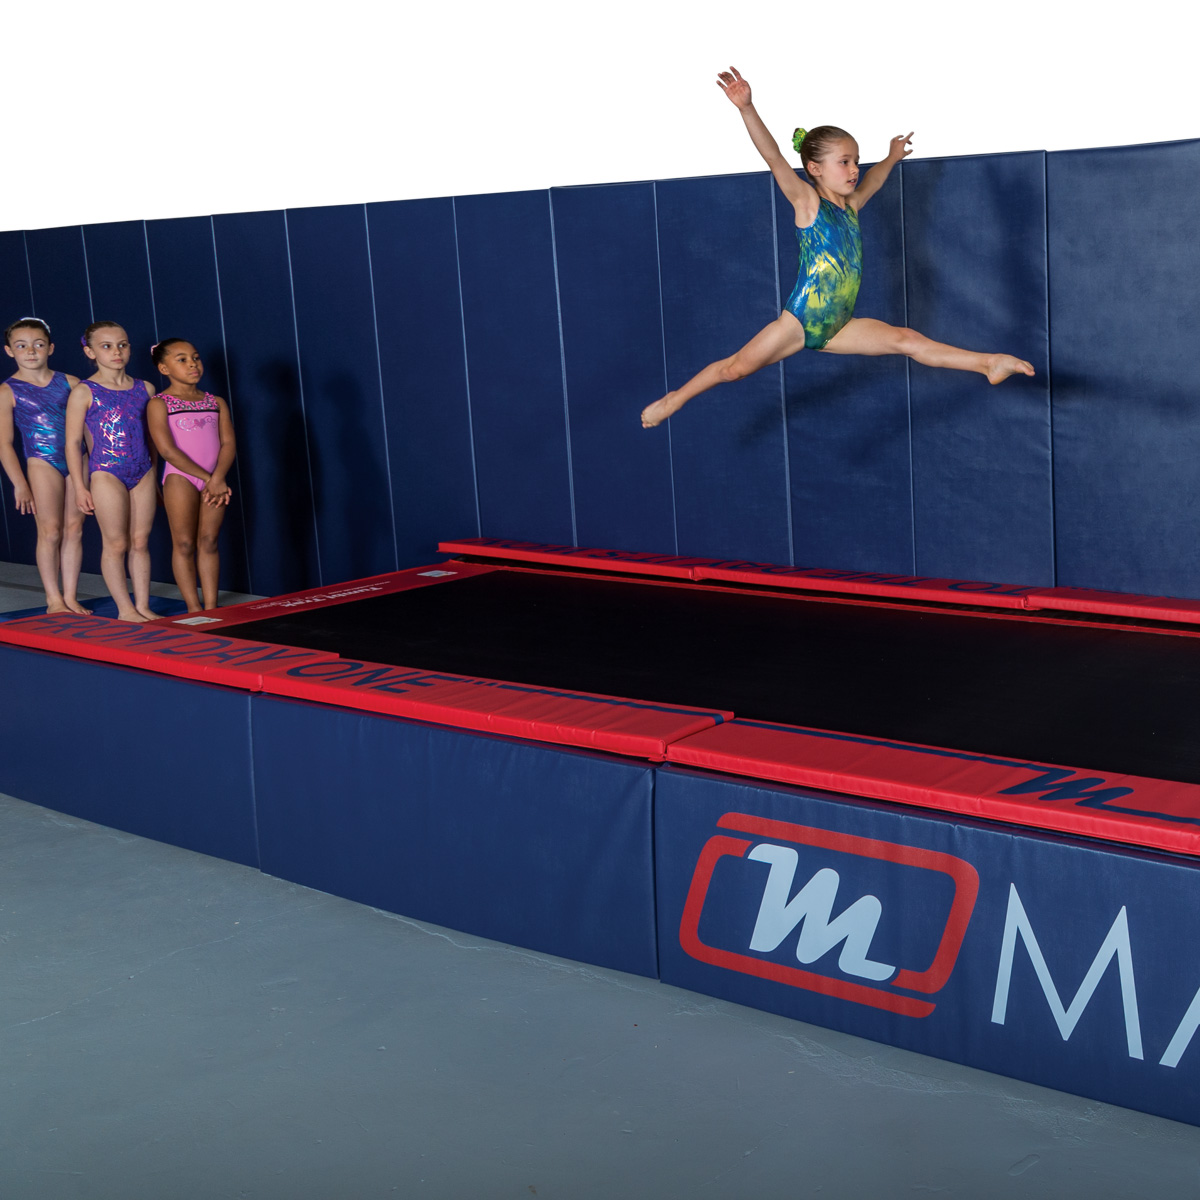 Tumbl Trak top padding with gymnasts, padded side skirt and removable wall padding mats